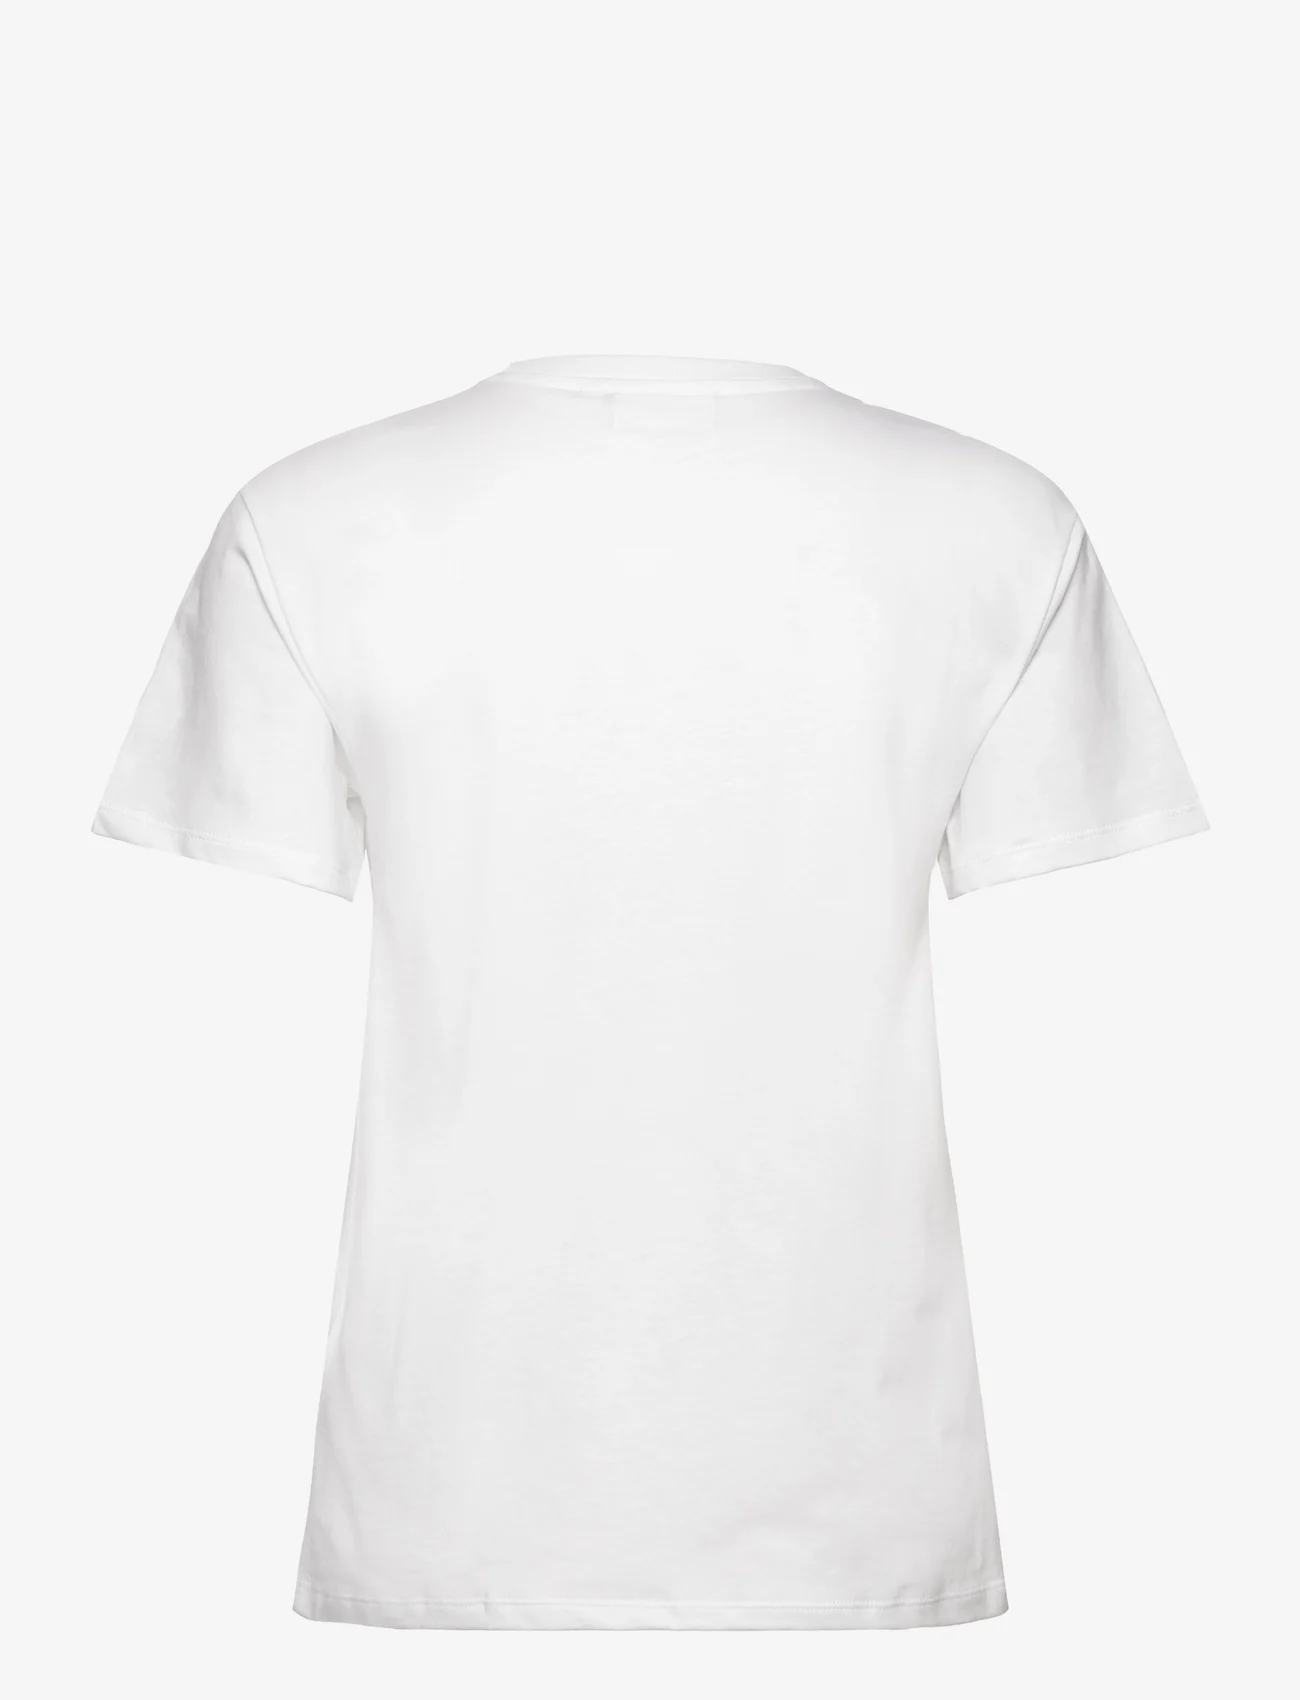 Calvin Klein - MICRO LOGO T SHIRT - t-shirts & tops - bright white - 1